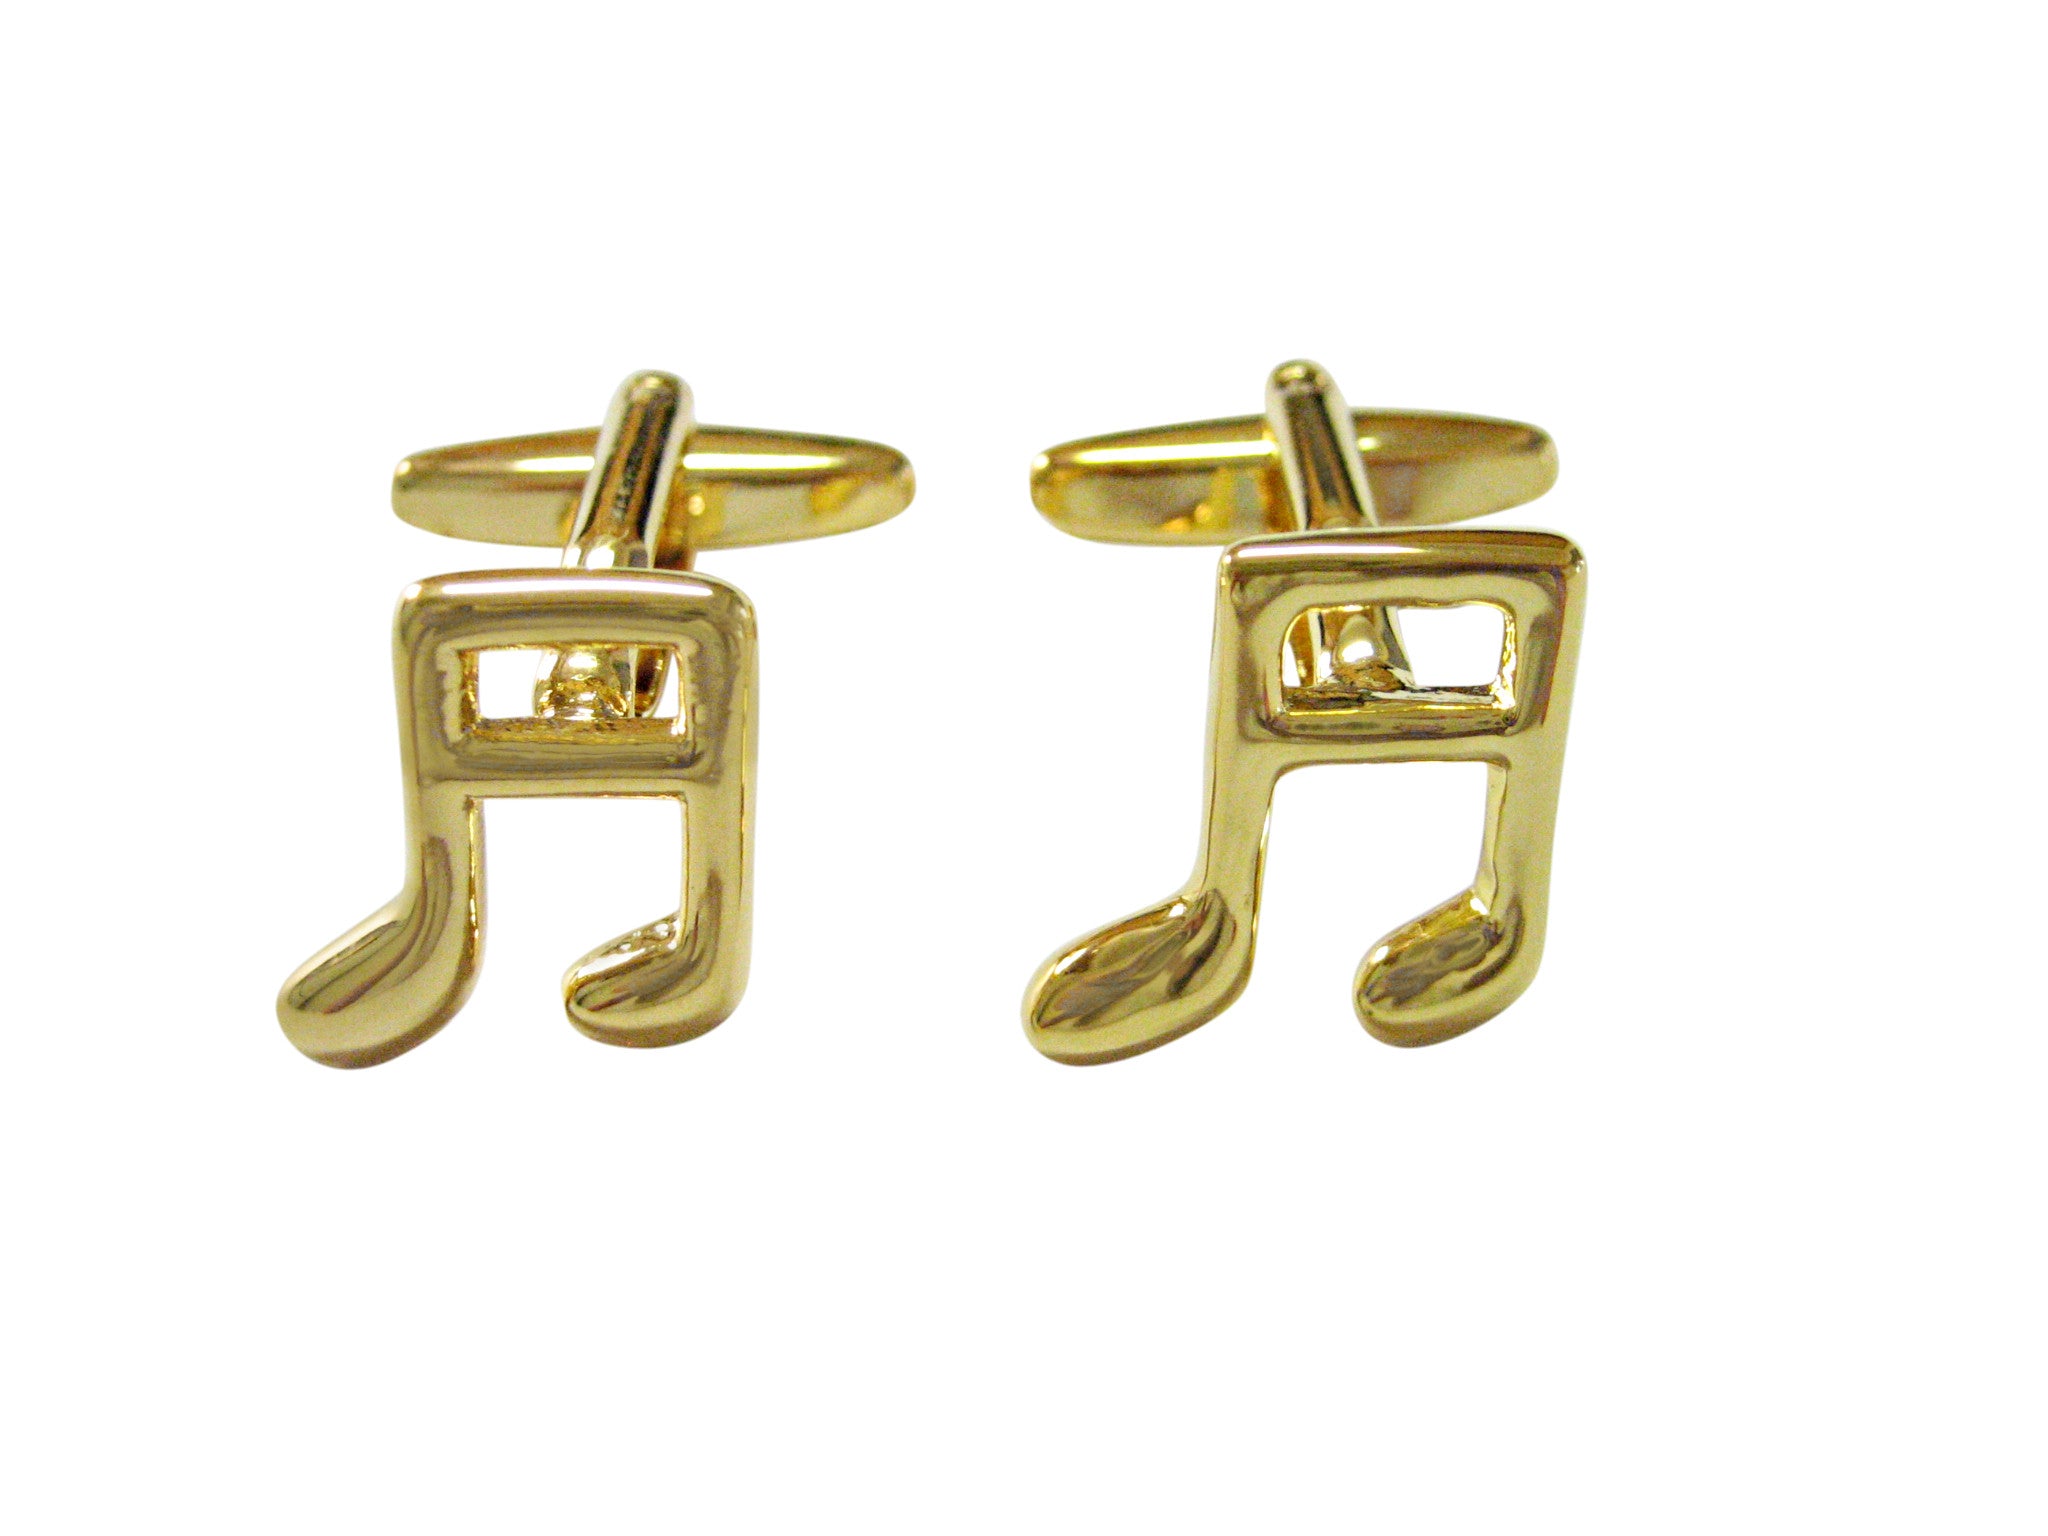 Gold Toned Quaver Musical Note Cufflinks